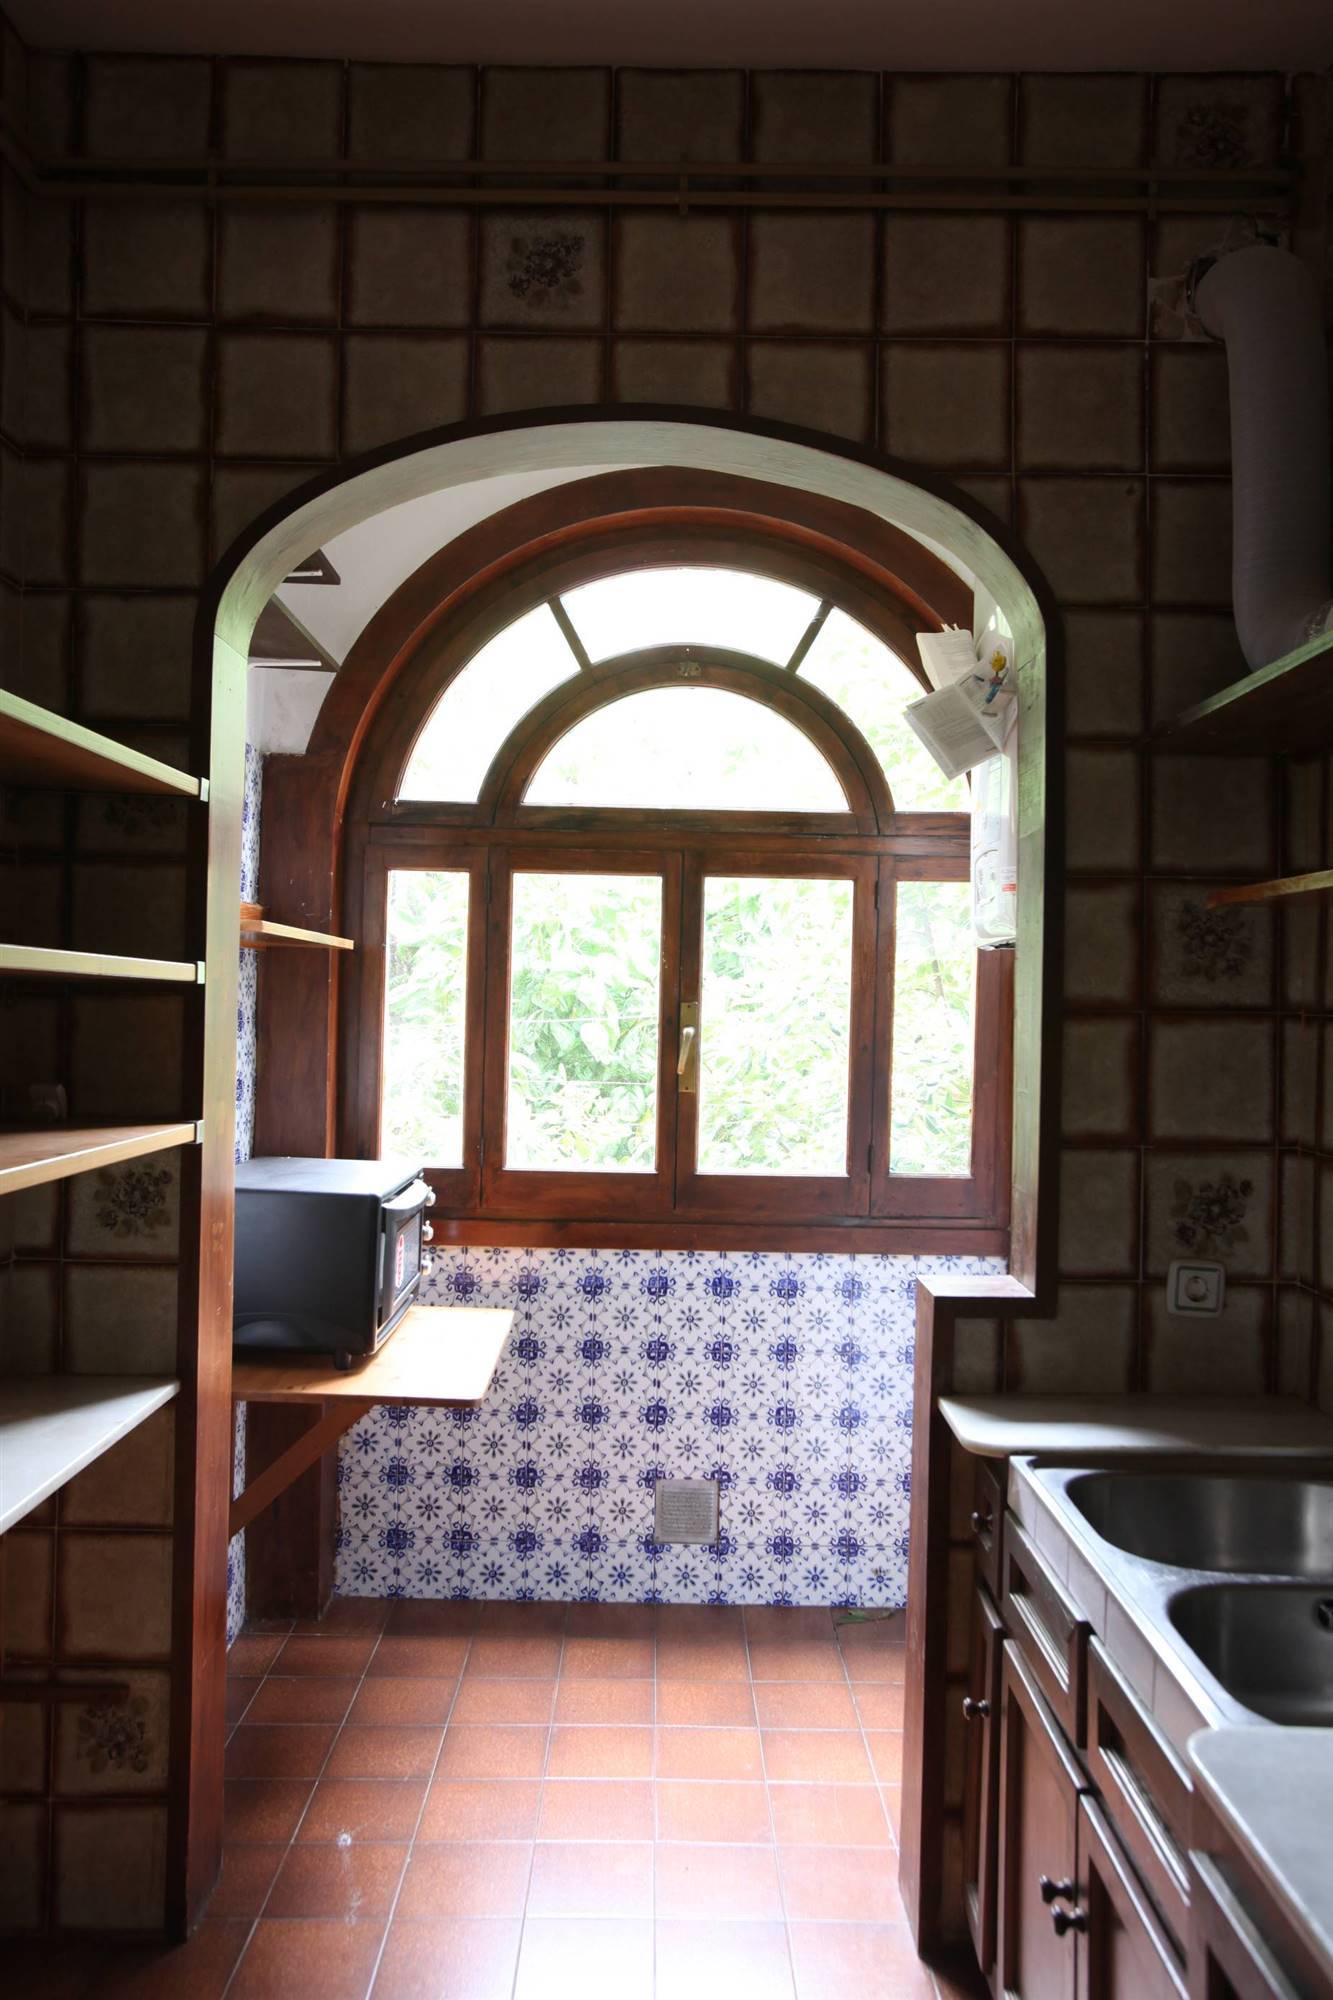 Cocina antigua con ventana de madera y azulejos pintados.